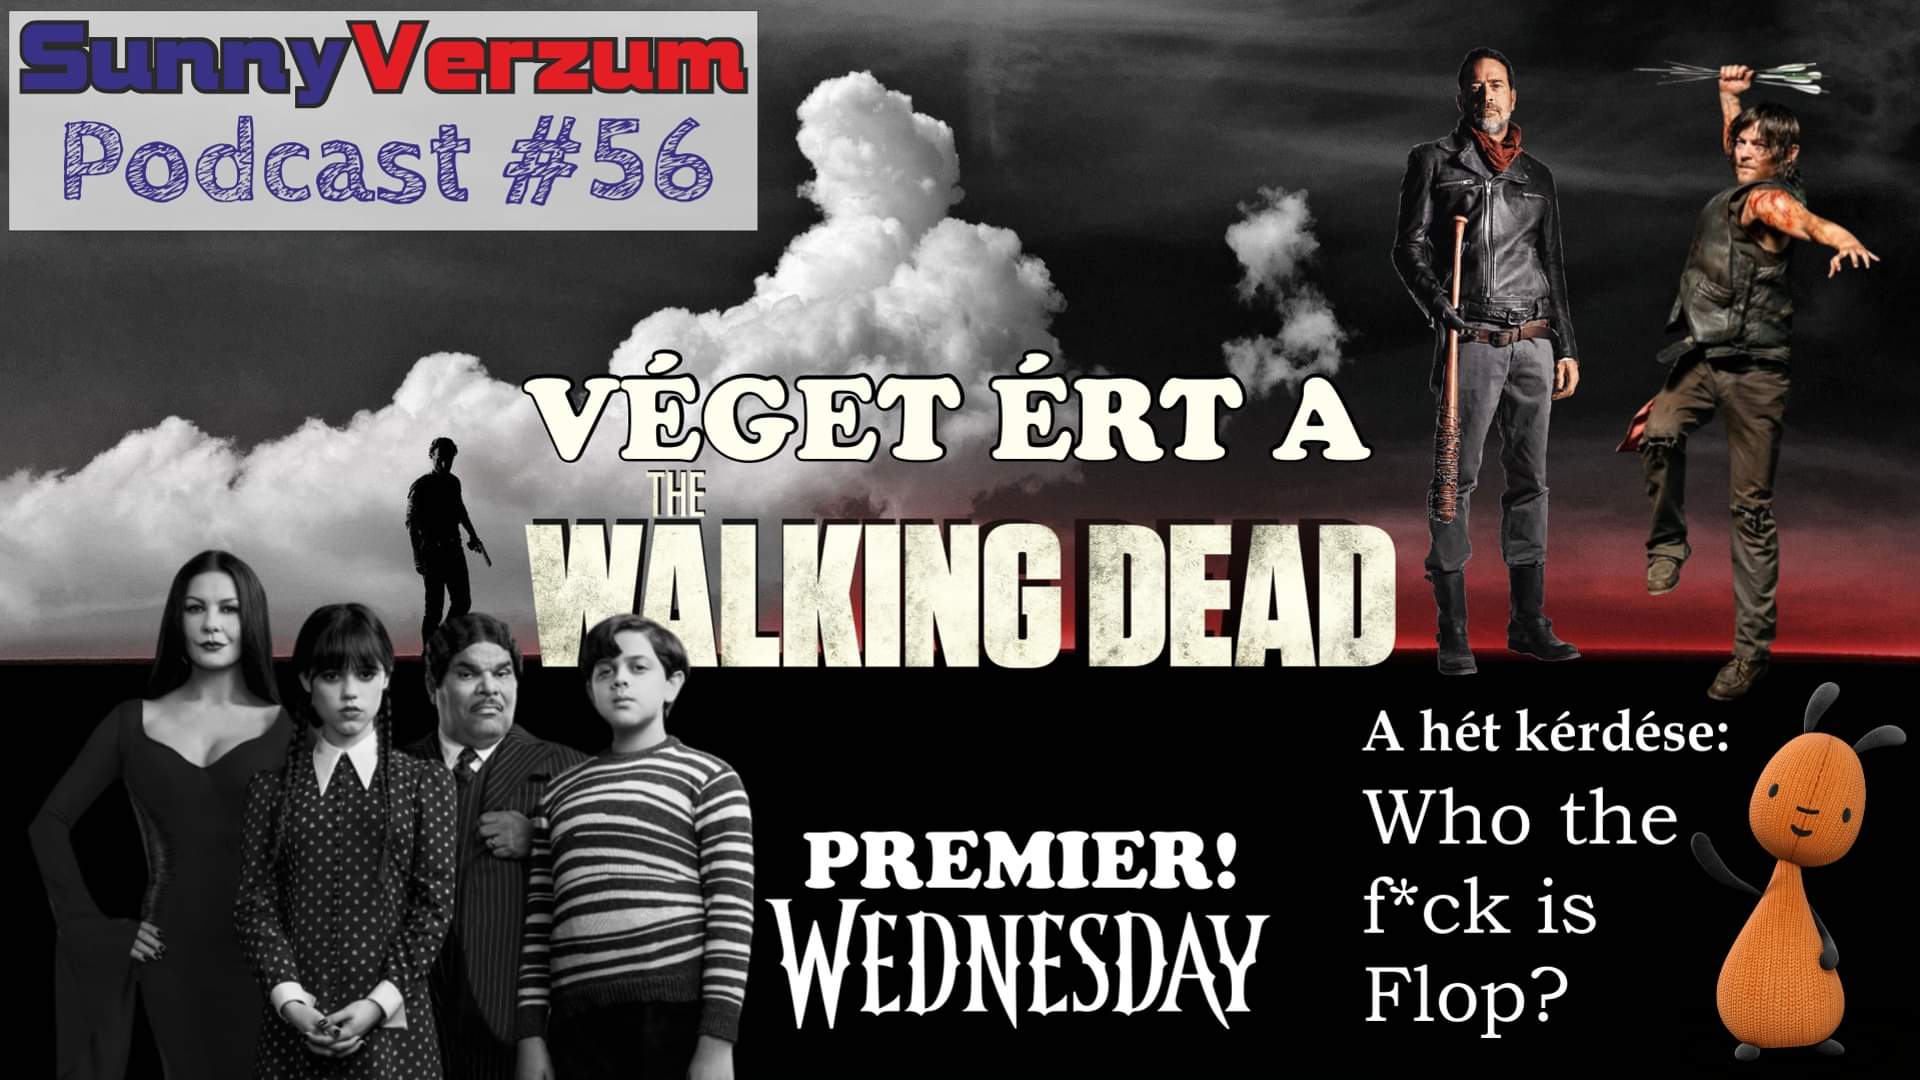 Véget ért a The Walking Dead - Premier: Wednesday